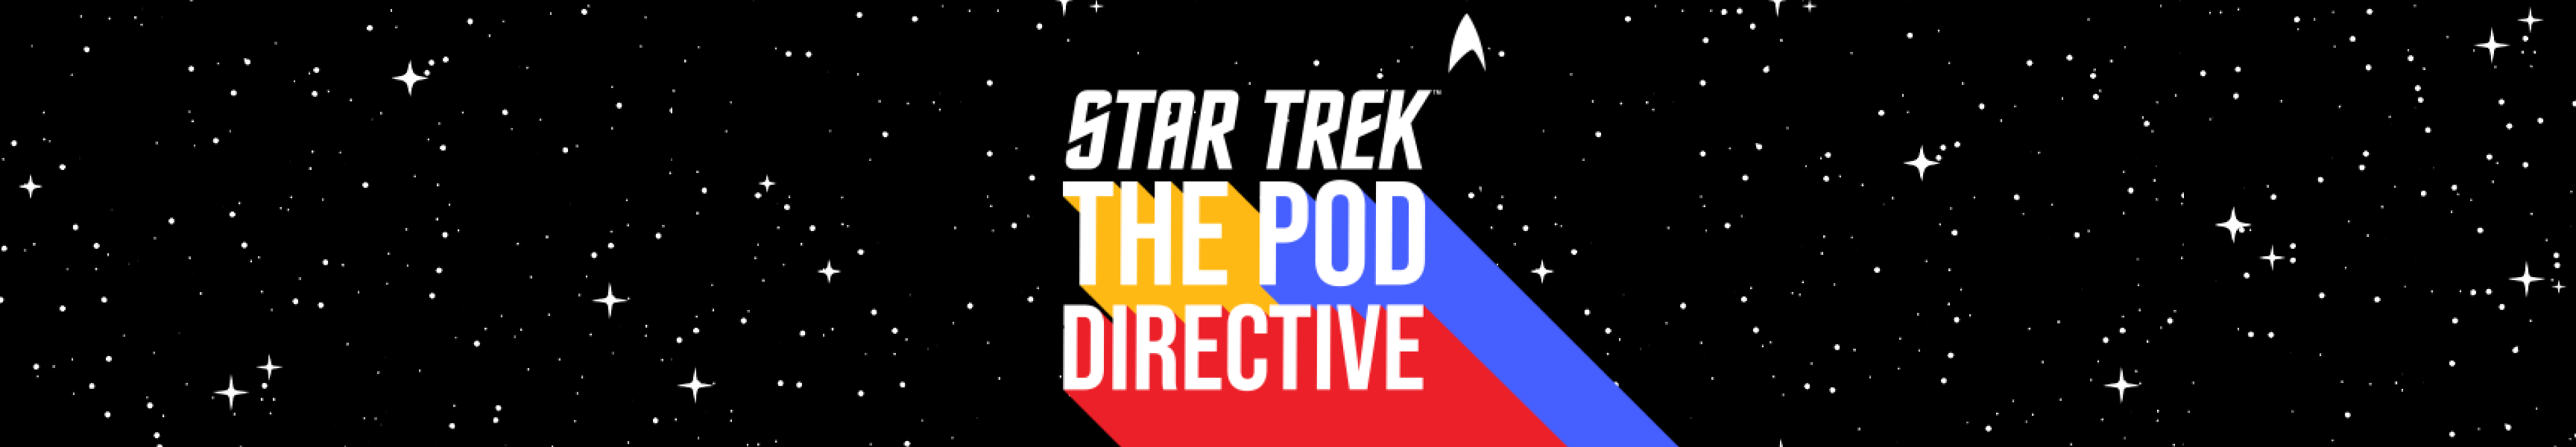 Star Trek: La directive 